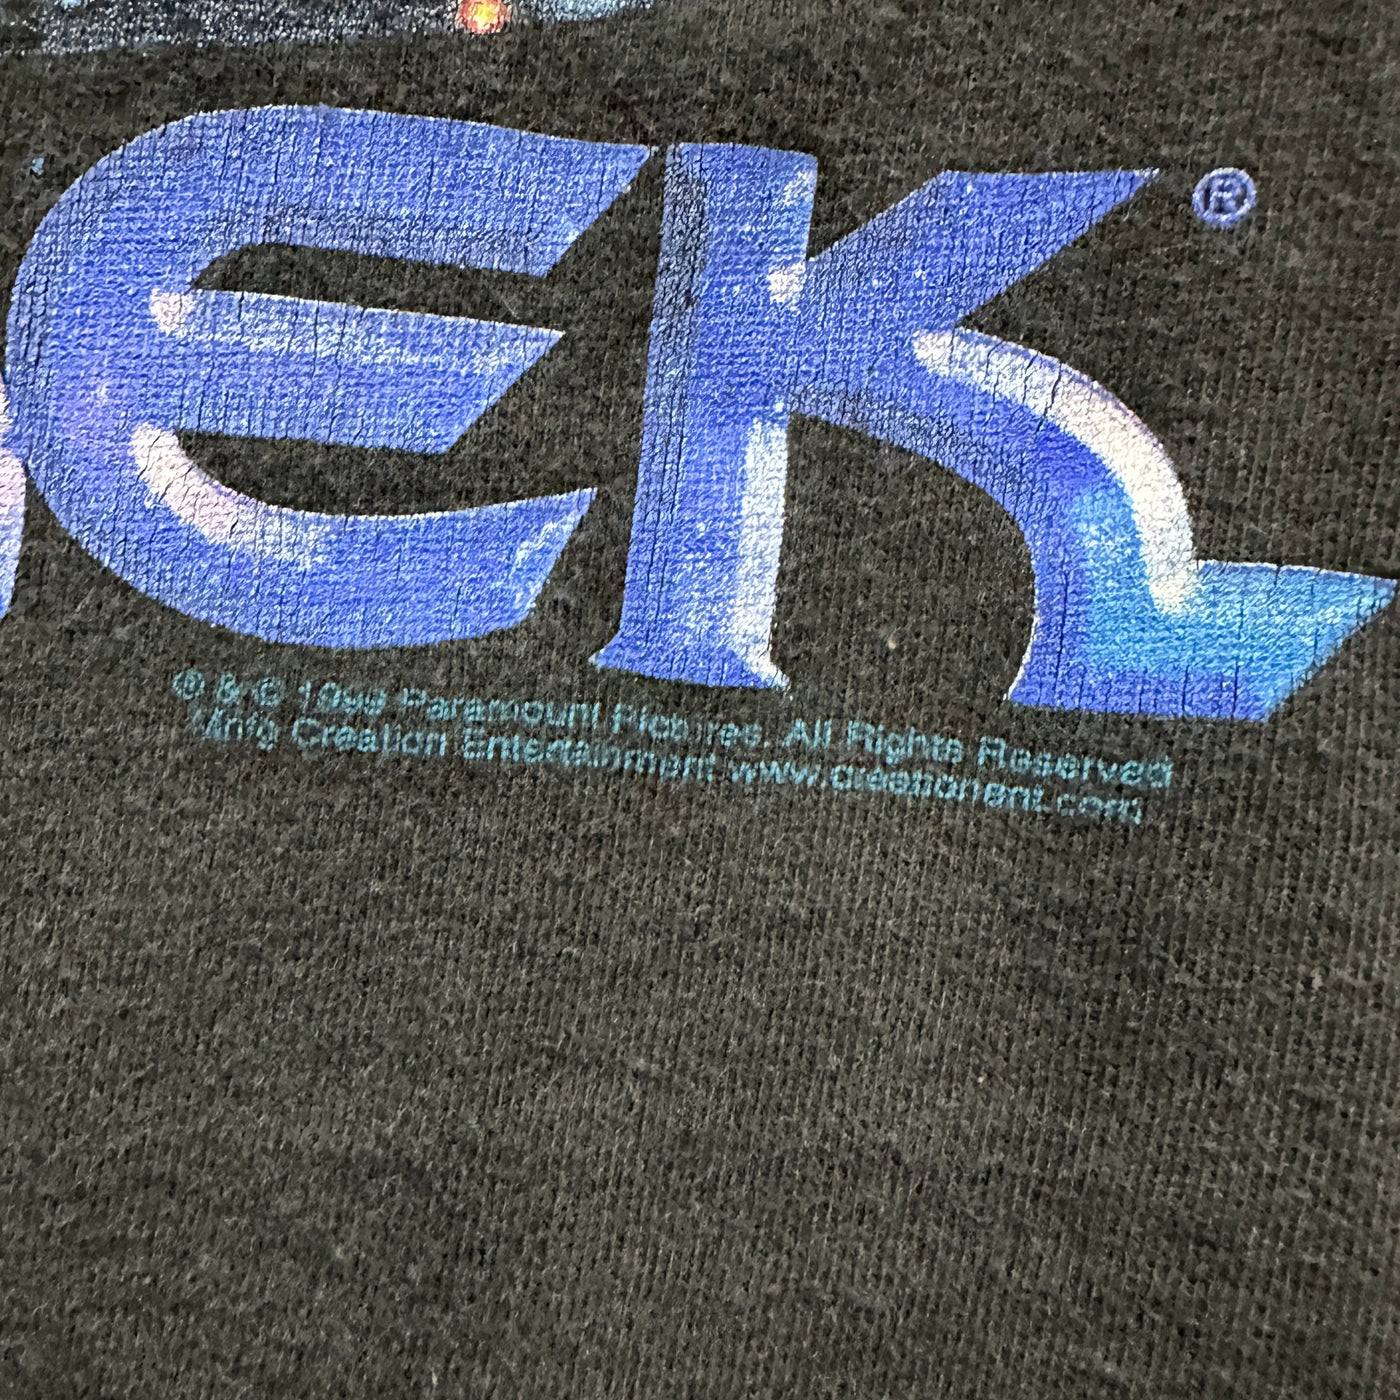 '99 Star Trek Black Movie T-Shirt sz L